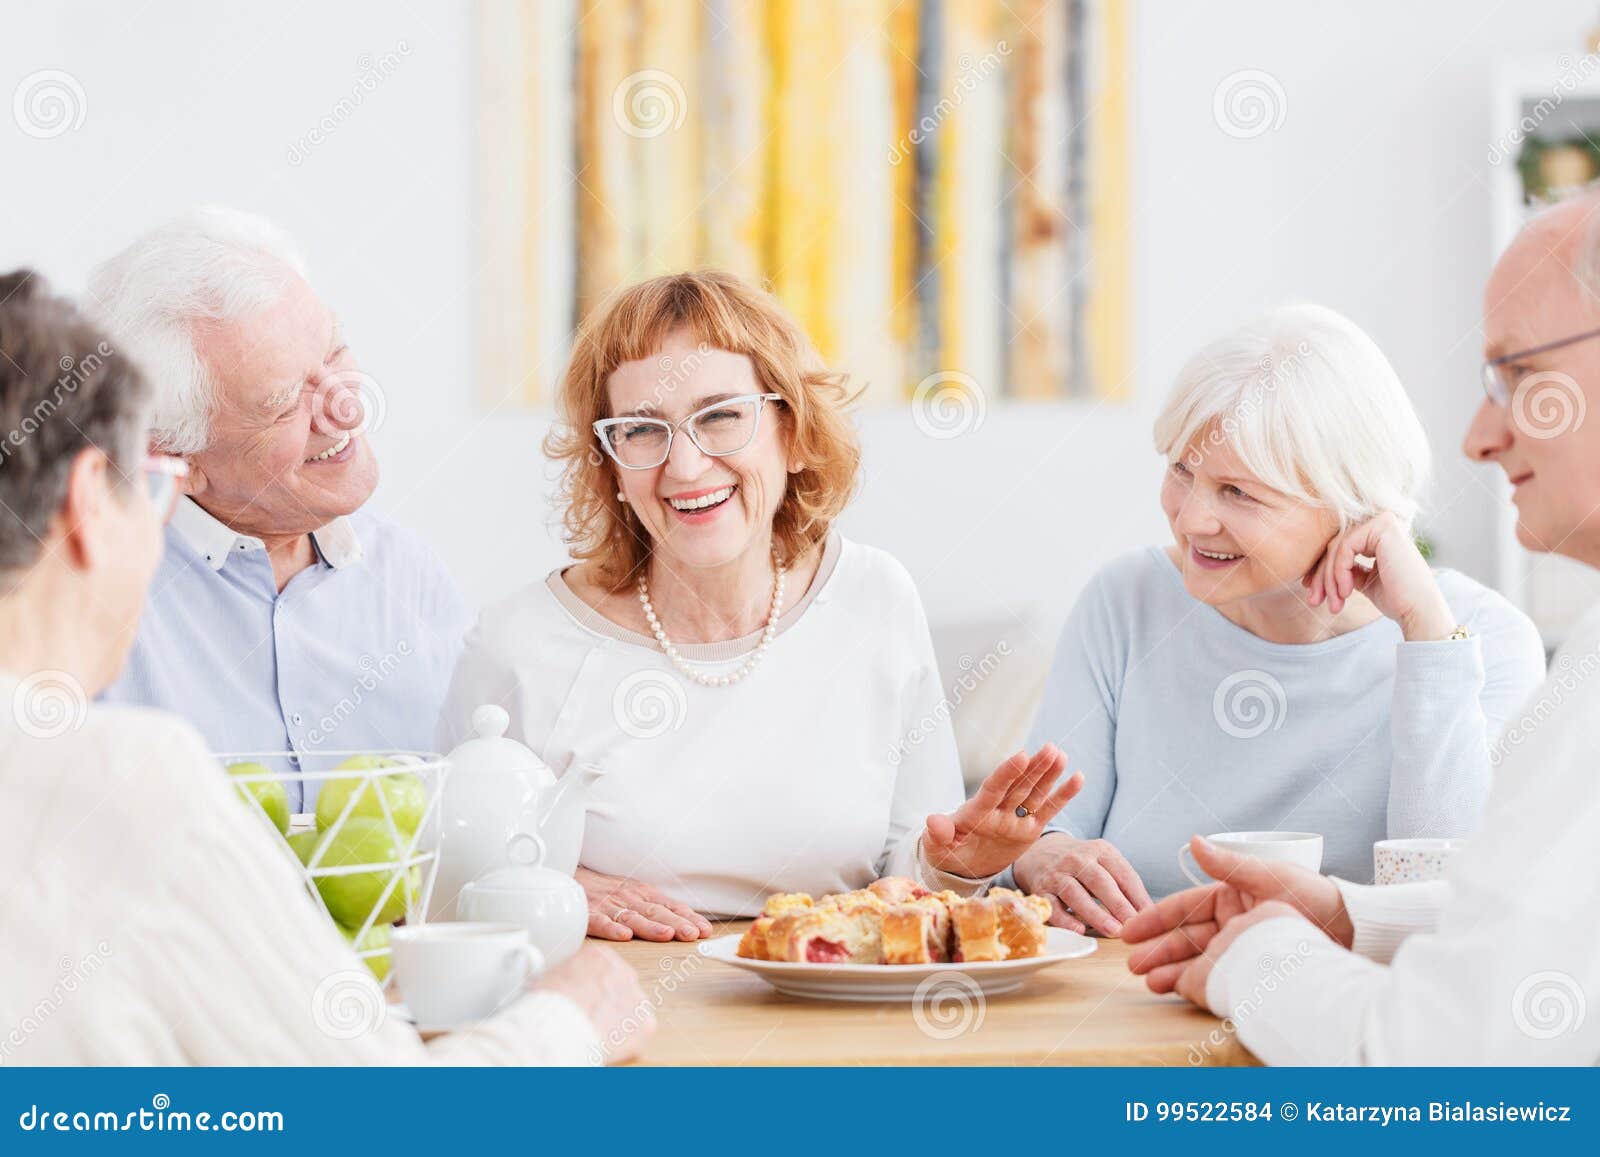 happy seniors chatting at cafe